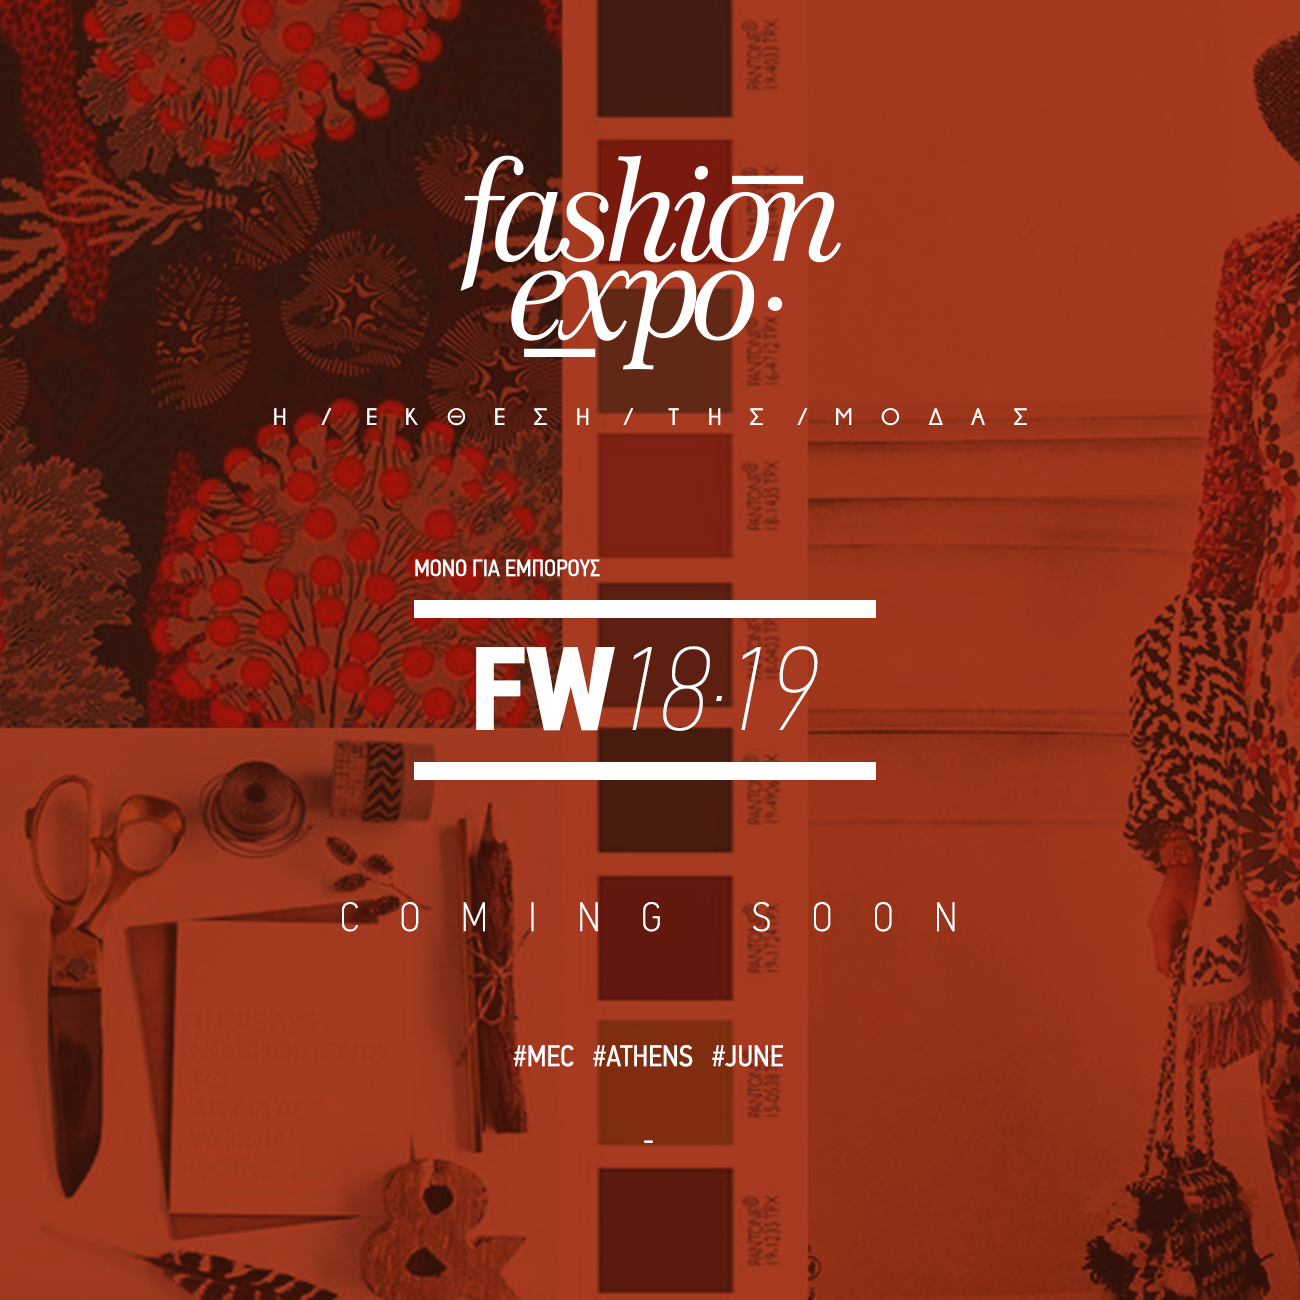 fashionexpo iounios2018 F 481329789.jpg